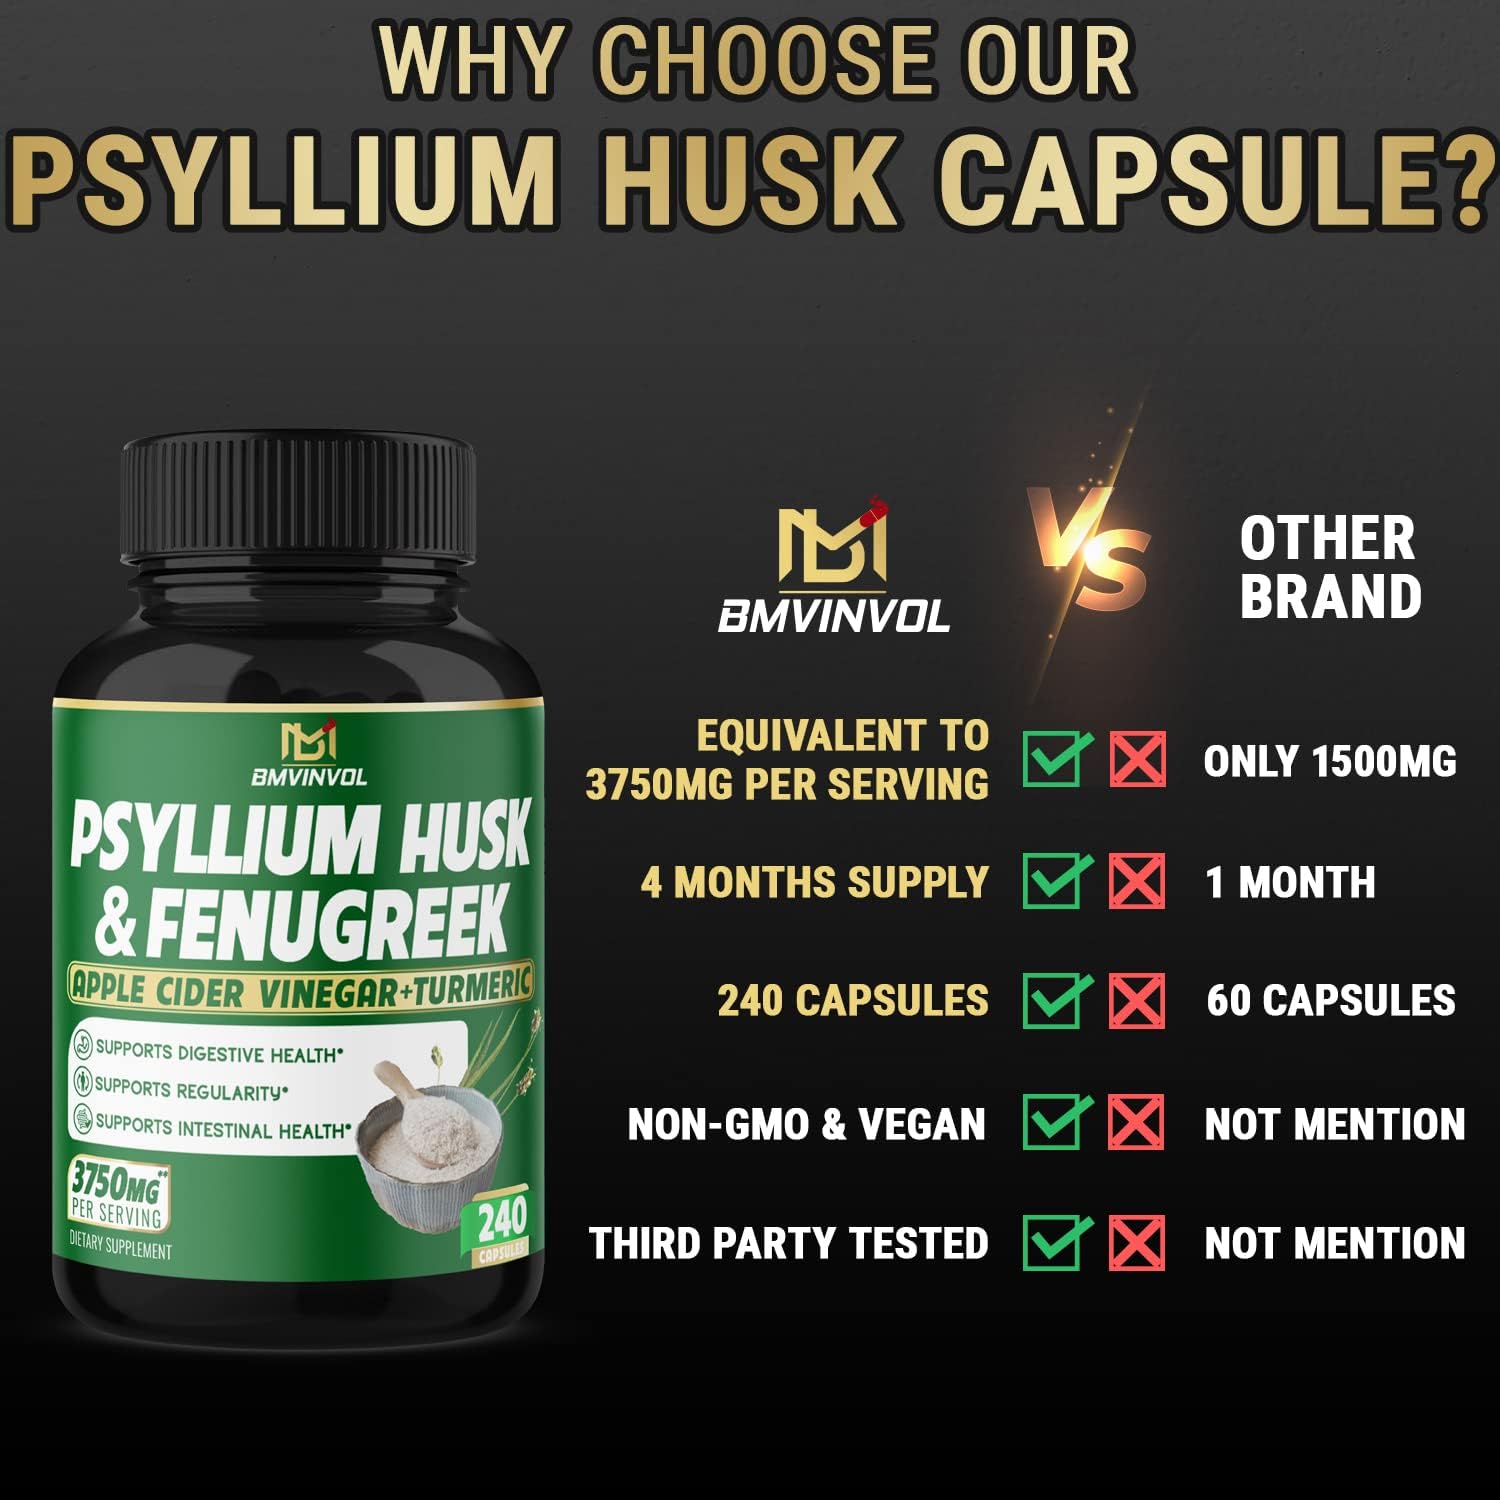 BMVINVOL Psyllium Husk Capsules 3750mg - 4 Months Supply - Fenugreek, Apple Cider Vinegar, Turmeric - Fiber Supplement for Supports Digestive Health & Regularity (240 Count) : Health & Household